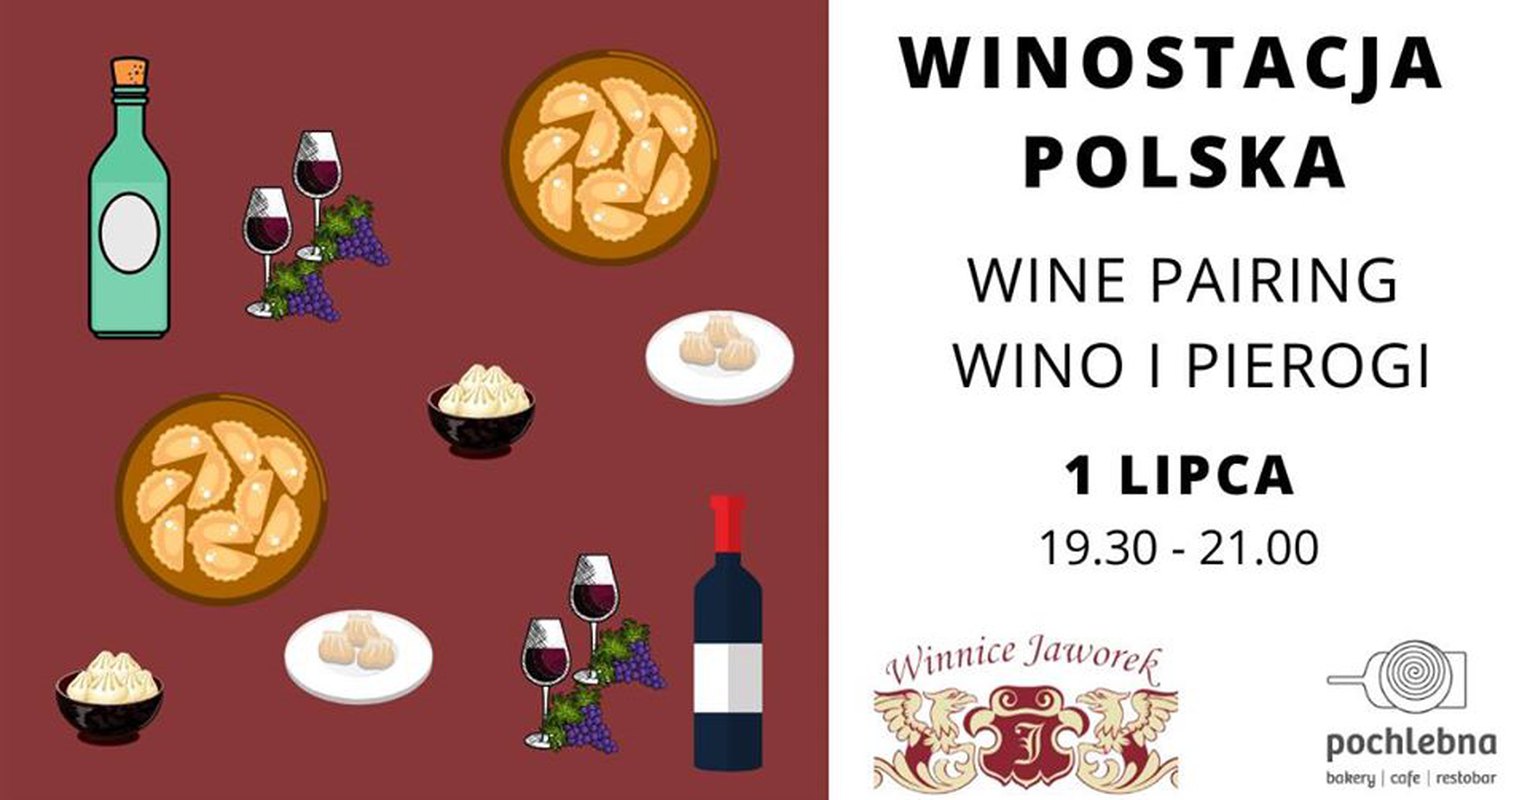 Winostacja Polska: Winnice Jaworek. Wino i pierogi